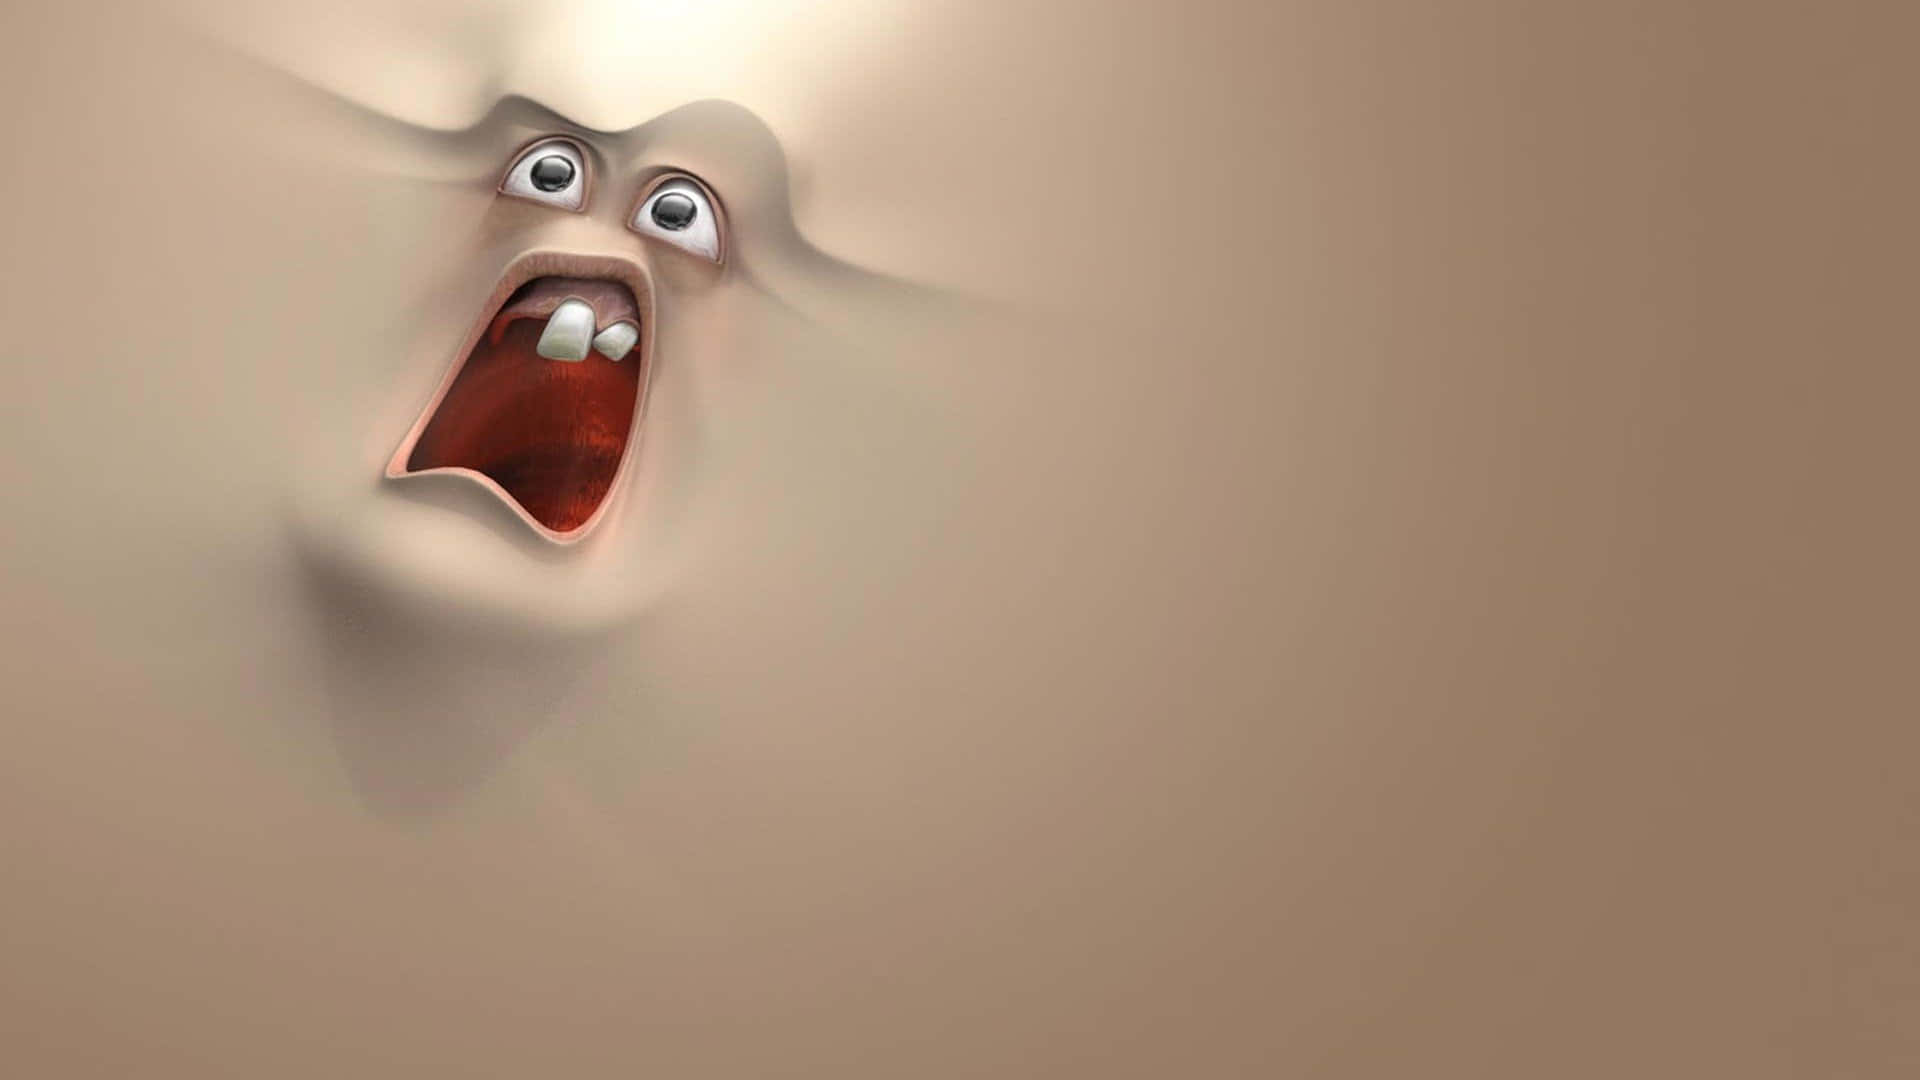 Odd Face Screaming [wallpaper]